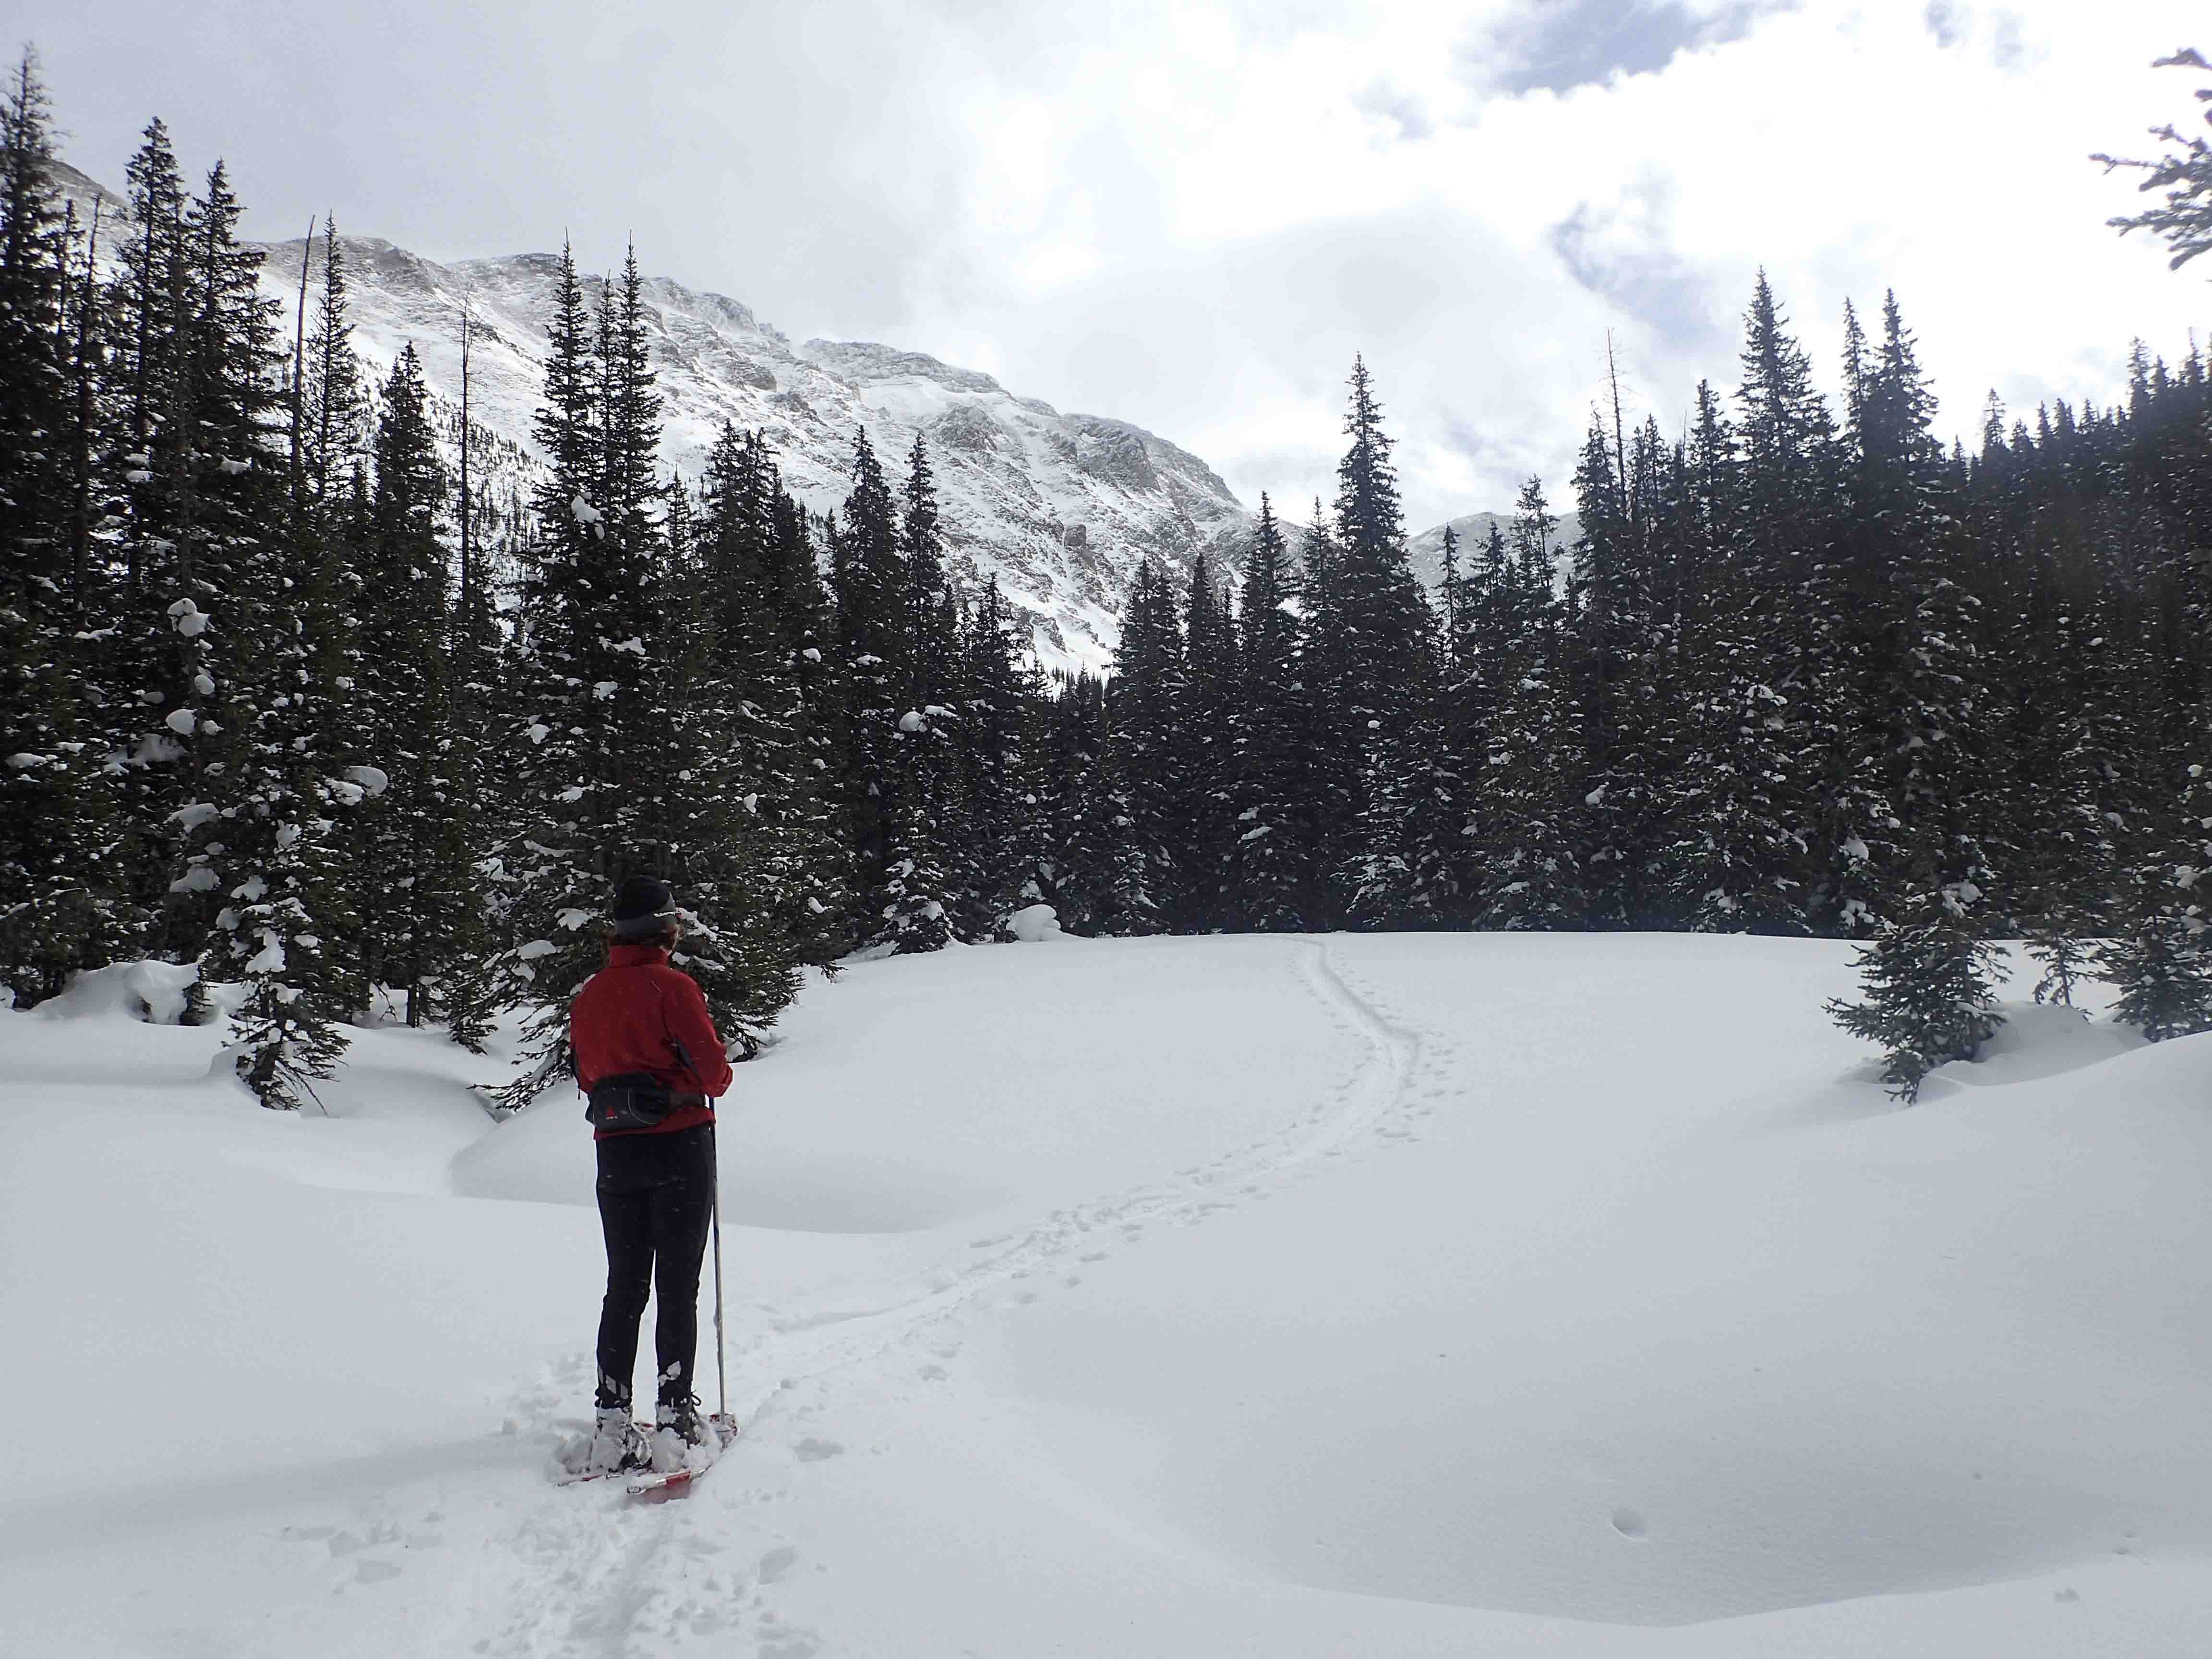 Person, snowy mountain pine trees, snowy hikes Colorado